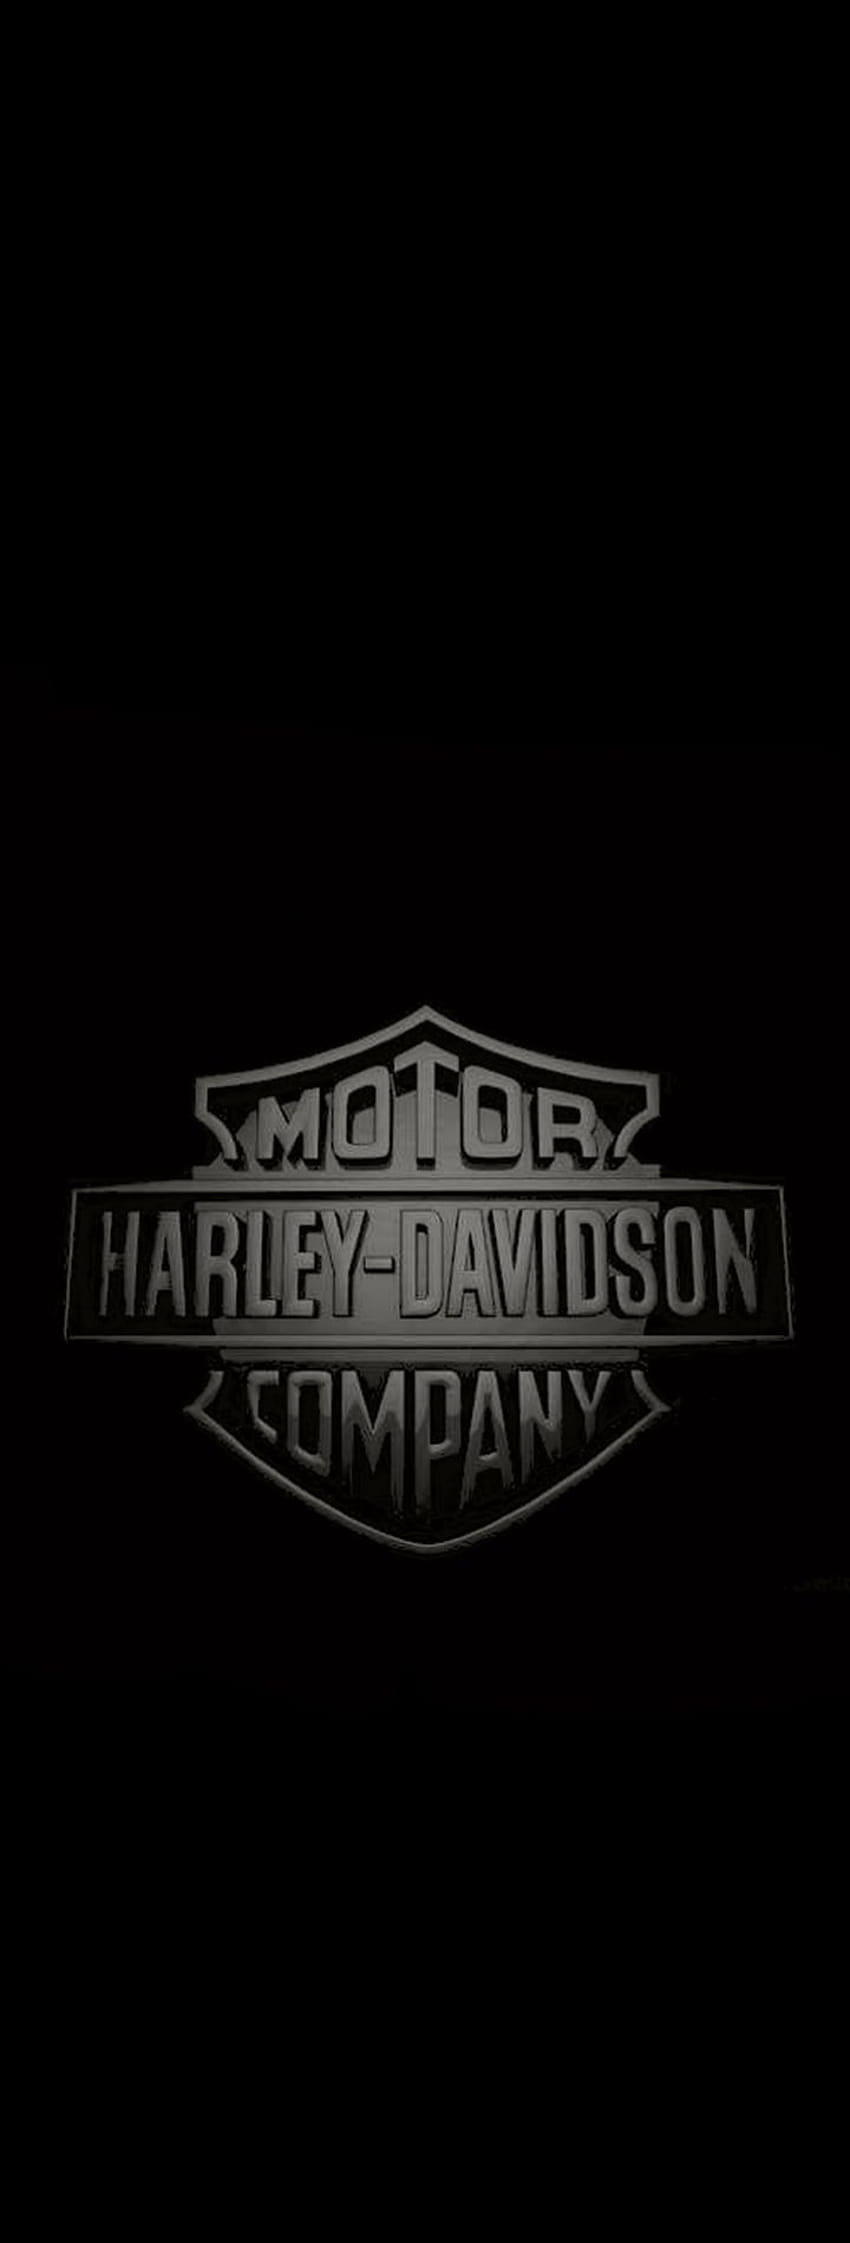 Ponsel Harley, iphone harley davidson wallpaper ponsel HD